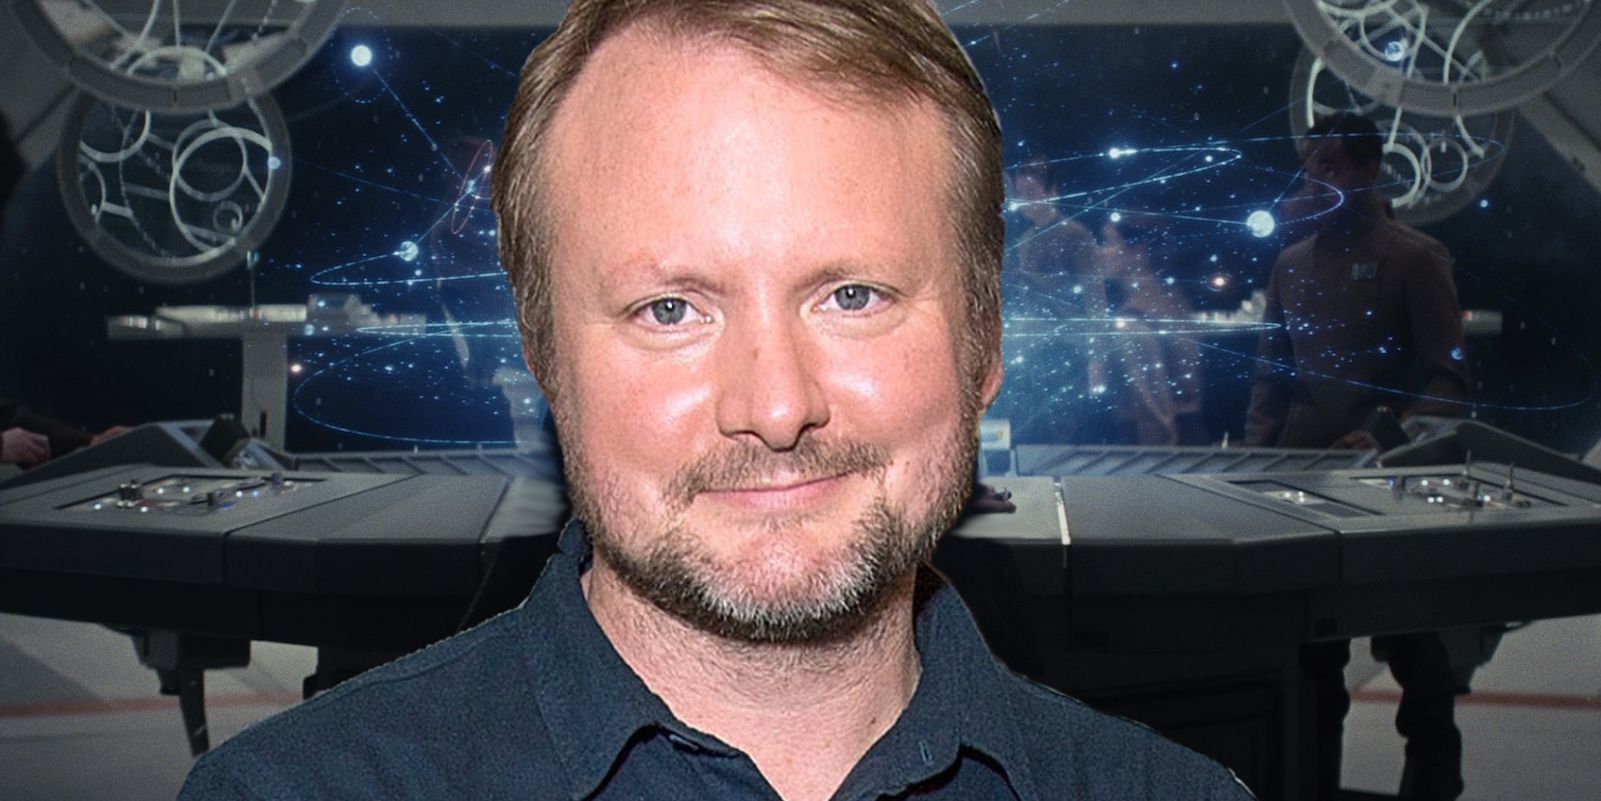 IGN - Star Wars: The Last Jedi director Rian Johnson recently